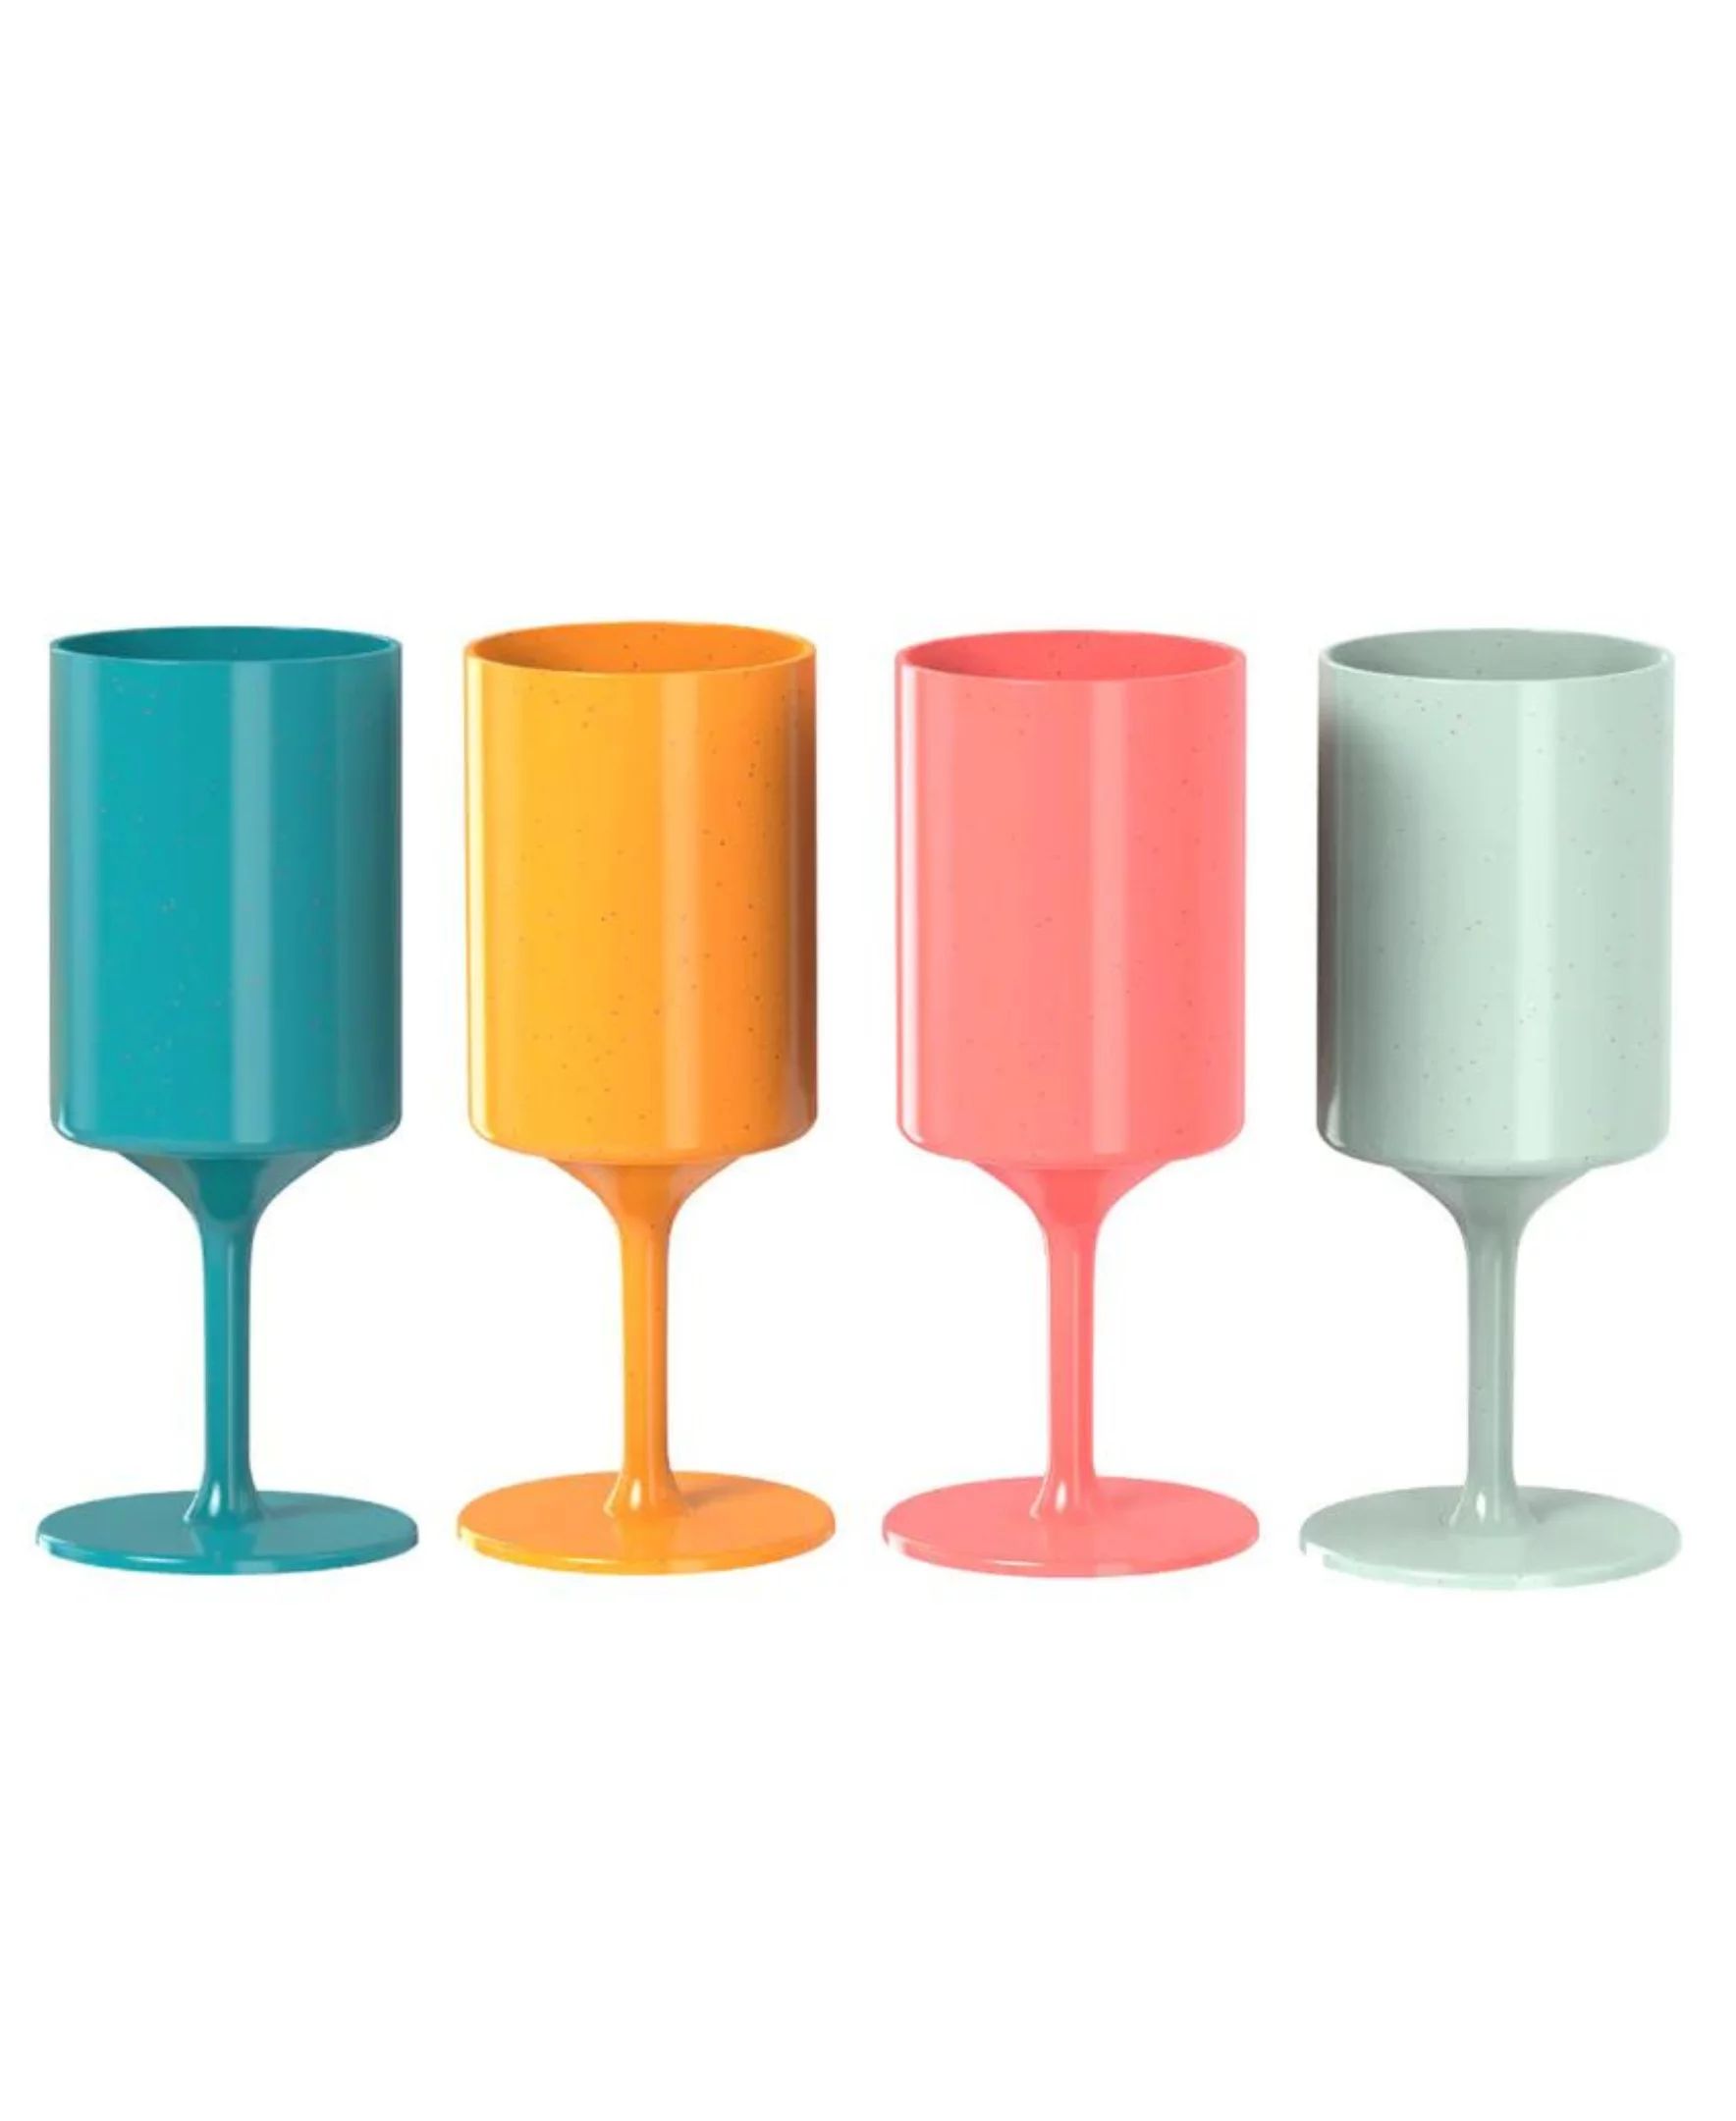 Knork Eco Stems, Outdoor Wine Glass, 4 Piece Set, Multi Colored (Mint, Orange, Coral, Teal) | Walmart (US)